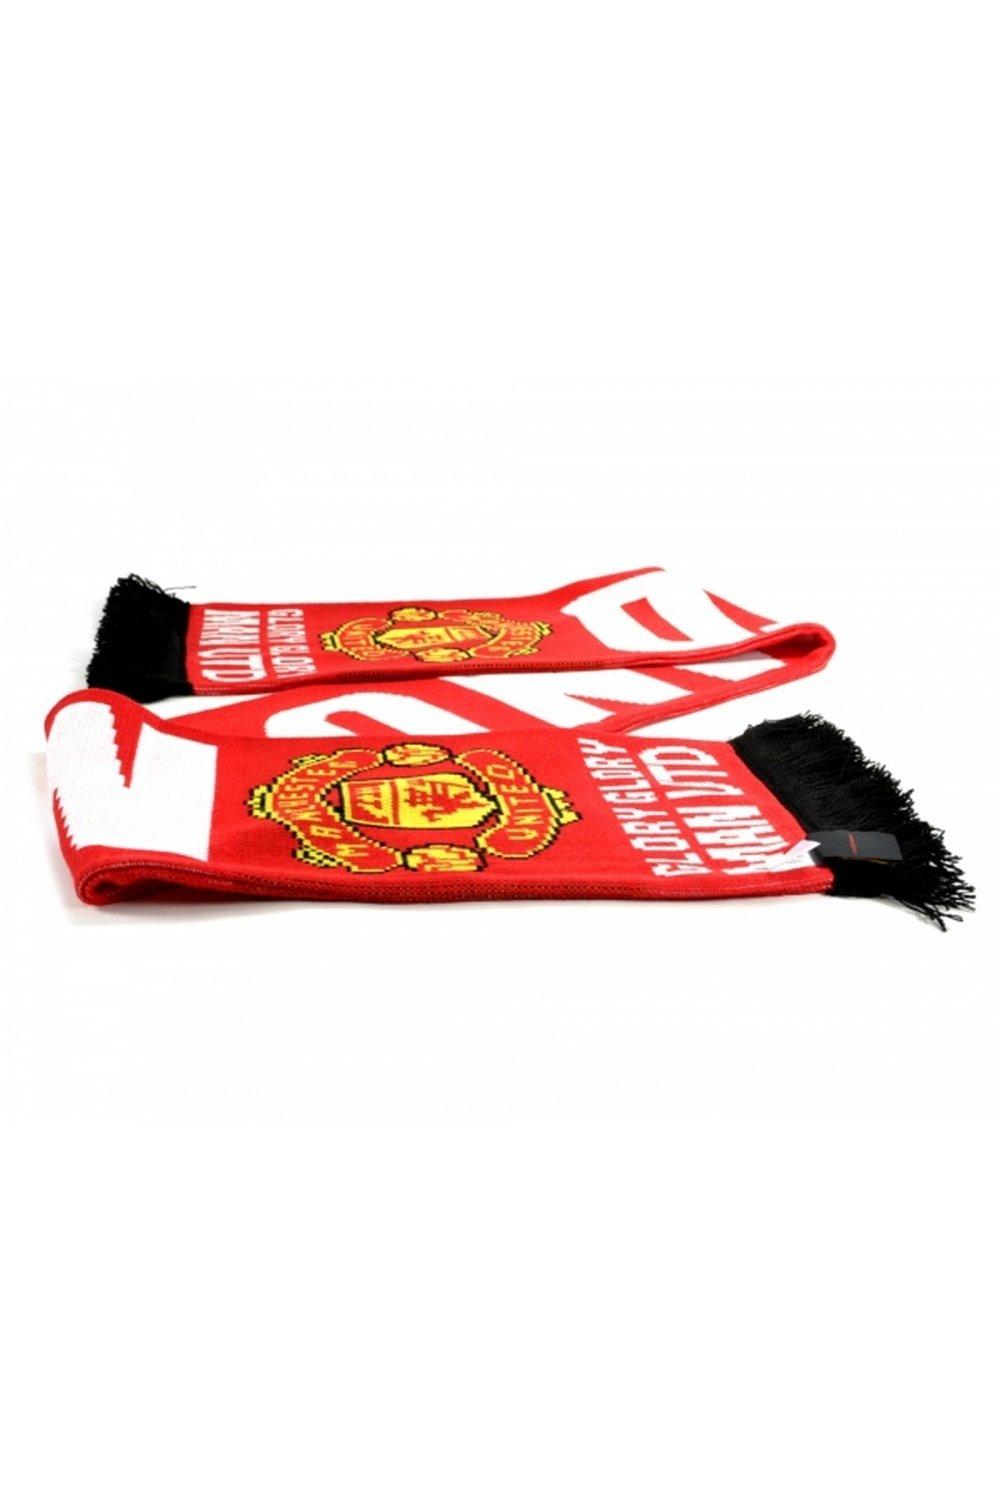 Официальный шарф Football Glory Glory Manchester United FC, мультиколор jnby бирюзовый жаккардовый шарф jnby